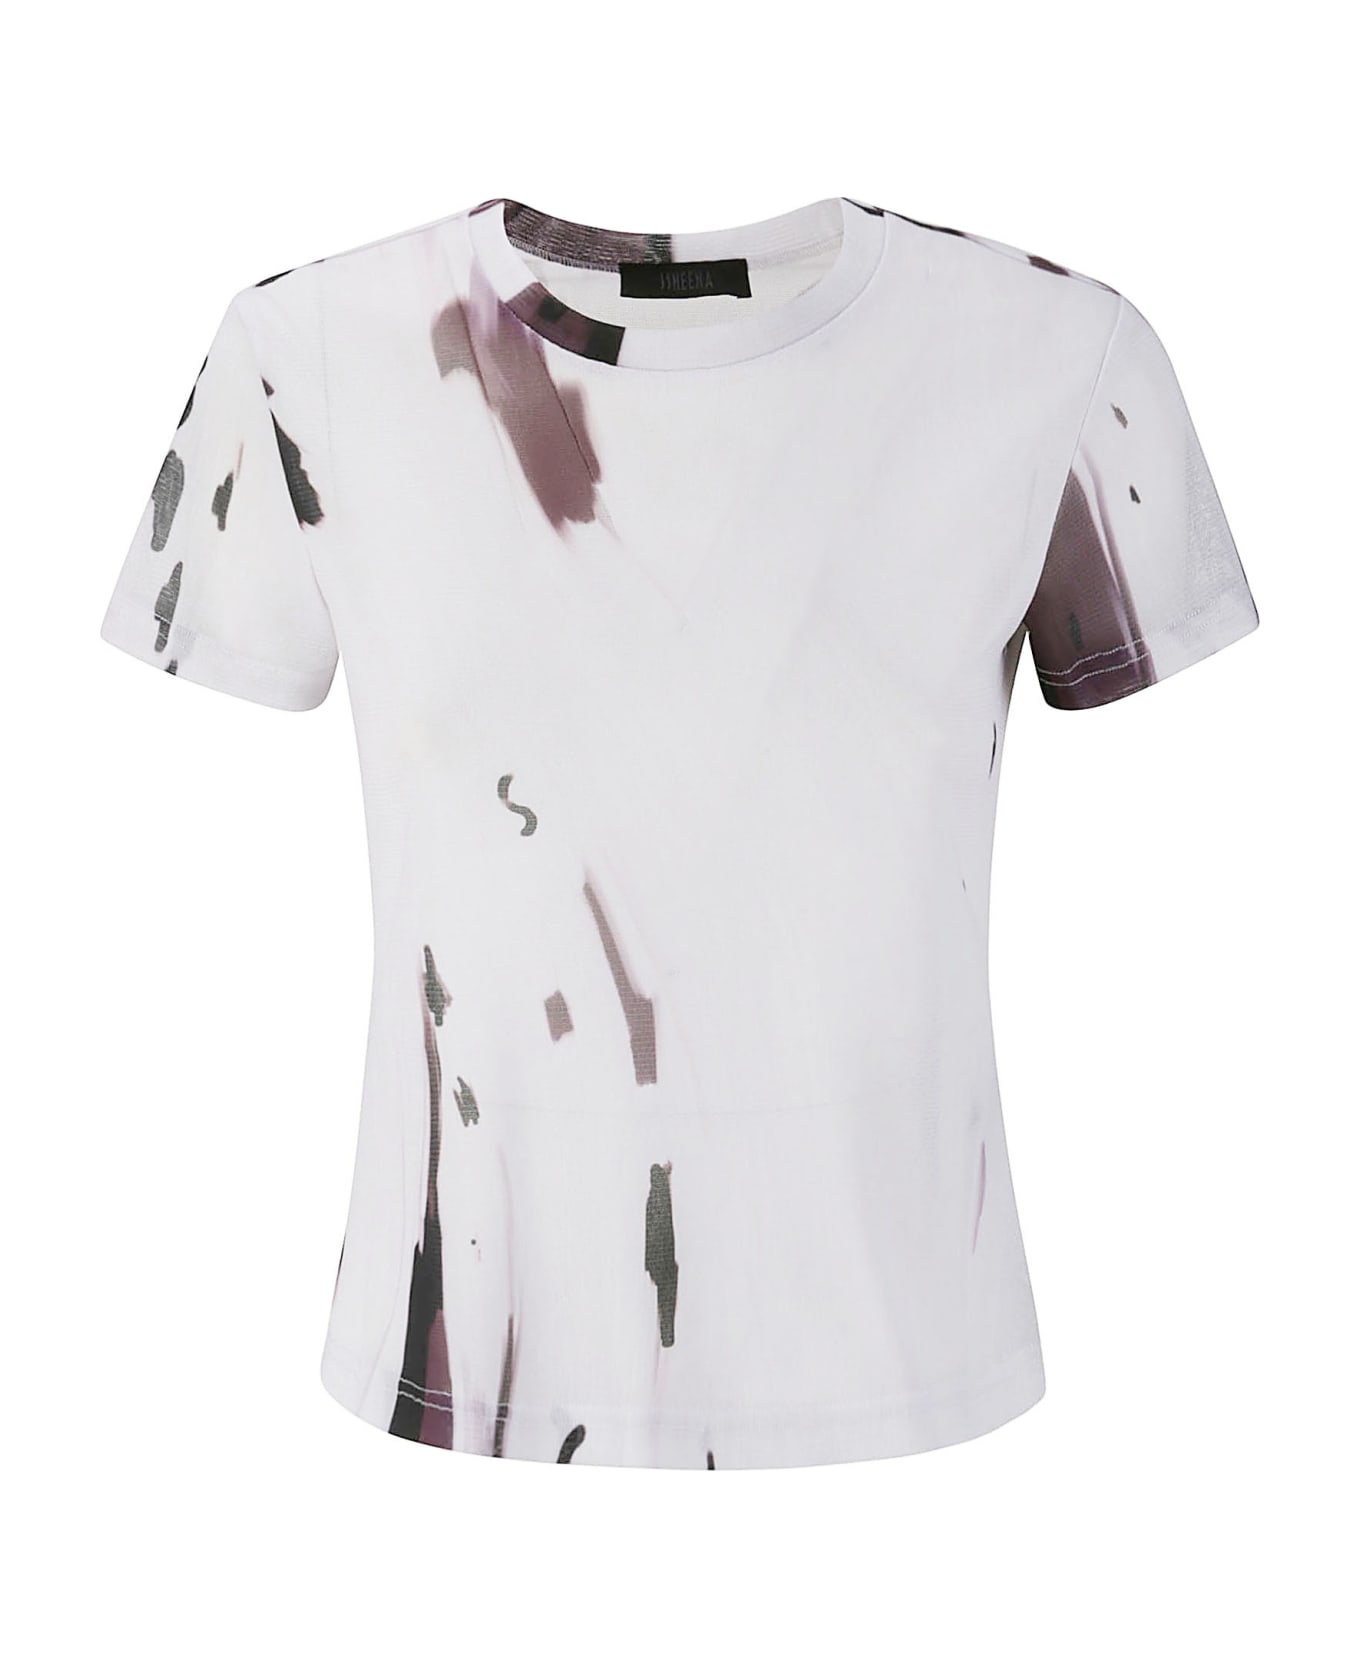 SSHEENA T-shirt - LEAF